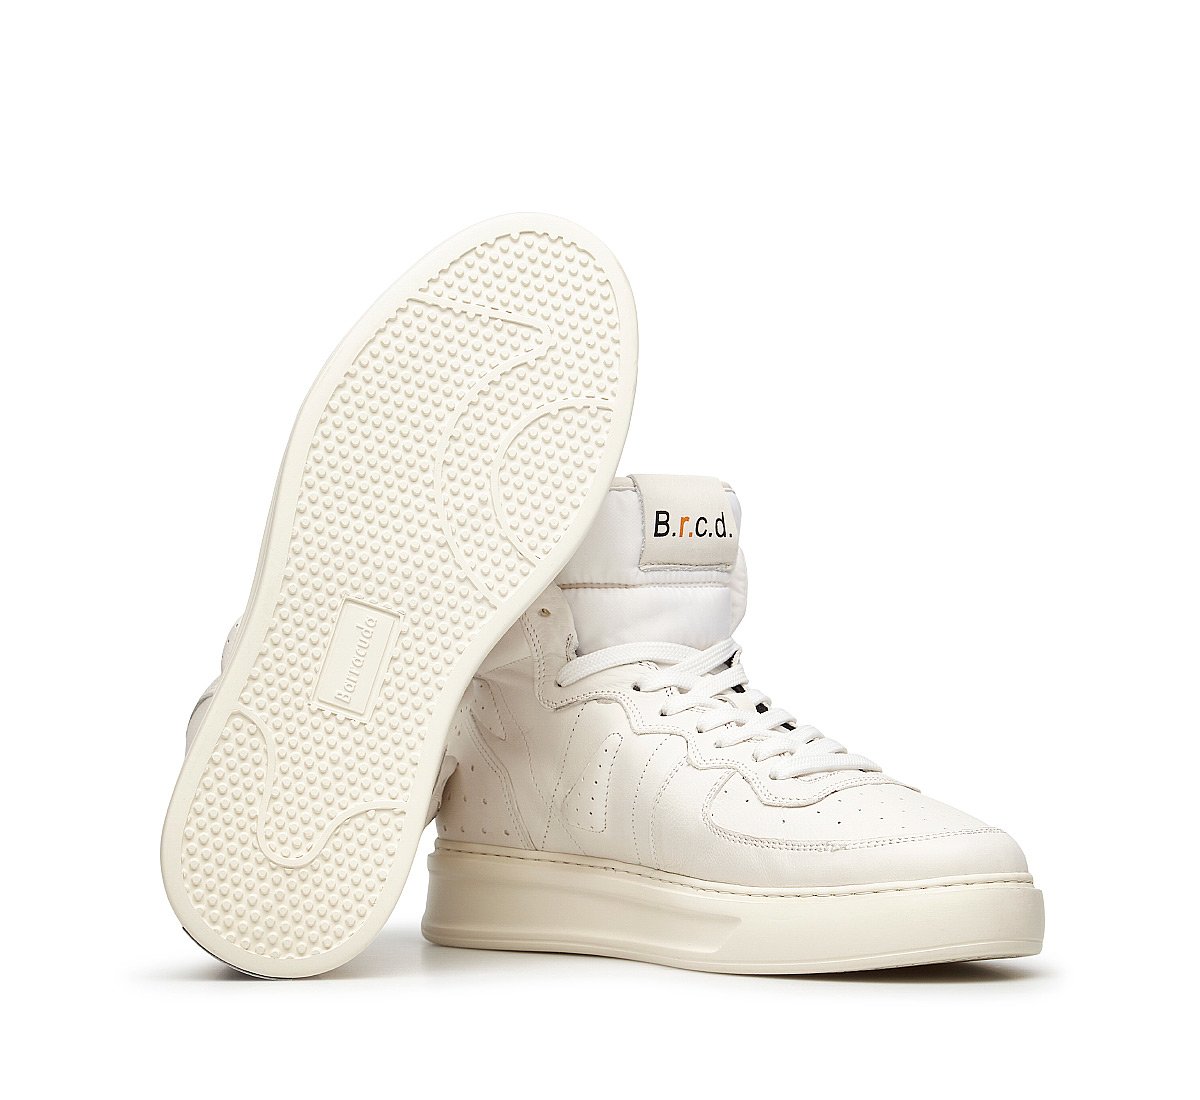 Sneaker Barracuda B.r.c.d.